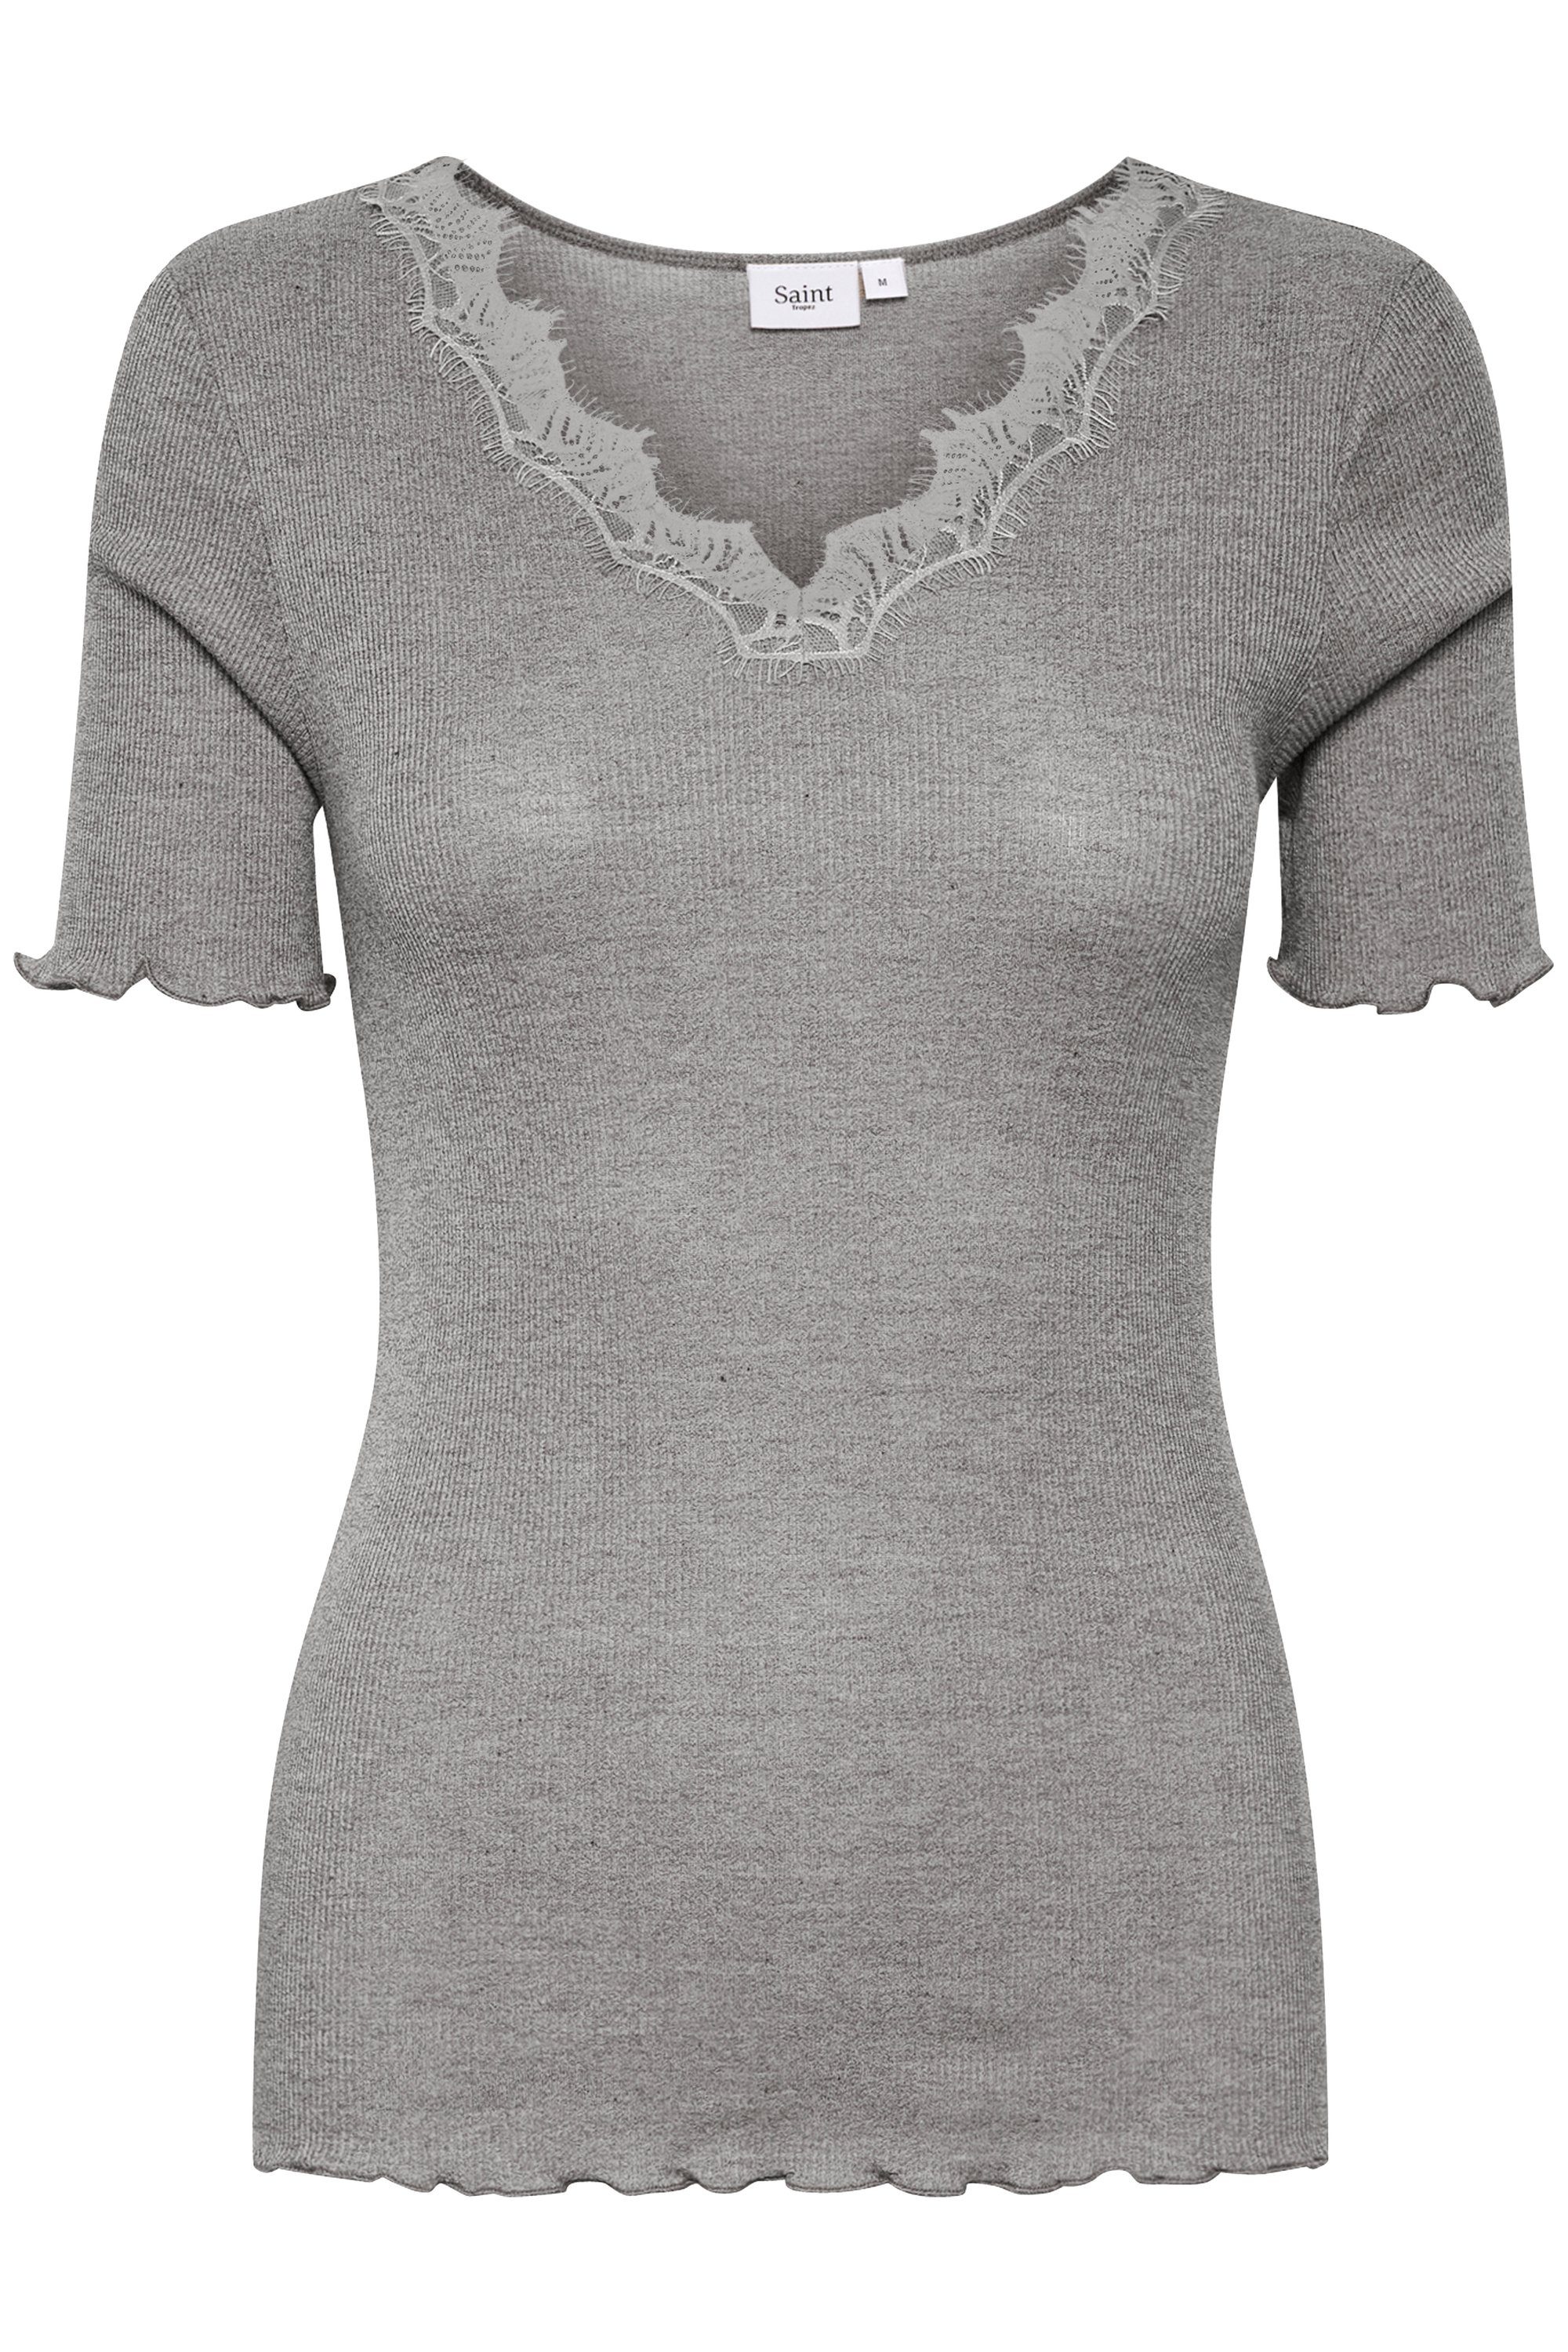 Saint Tropez T-Shirt T-shirt MayaSZ Mist Grey Melange